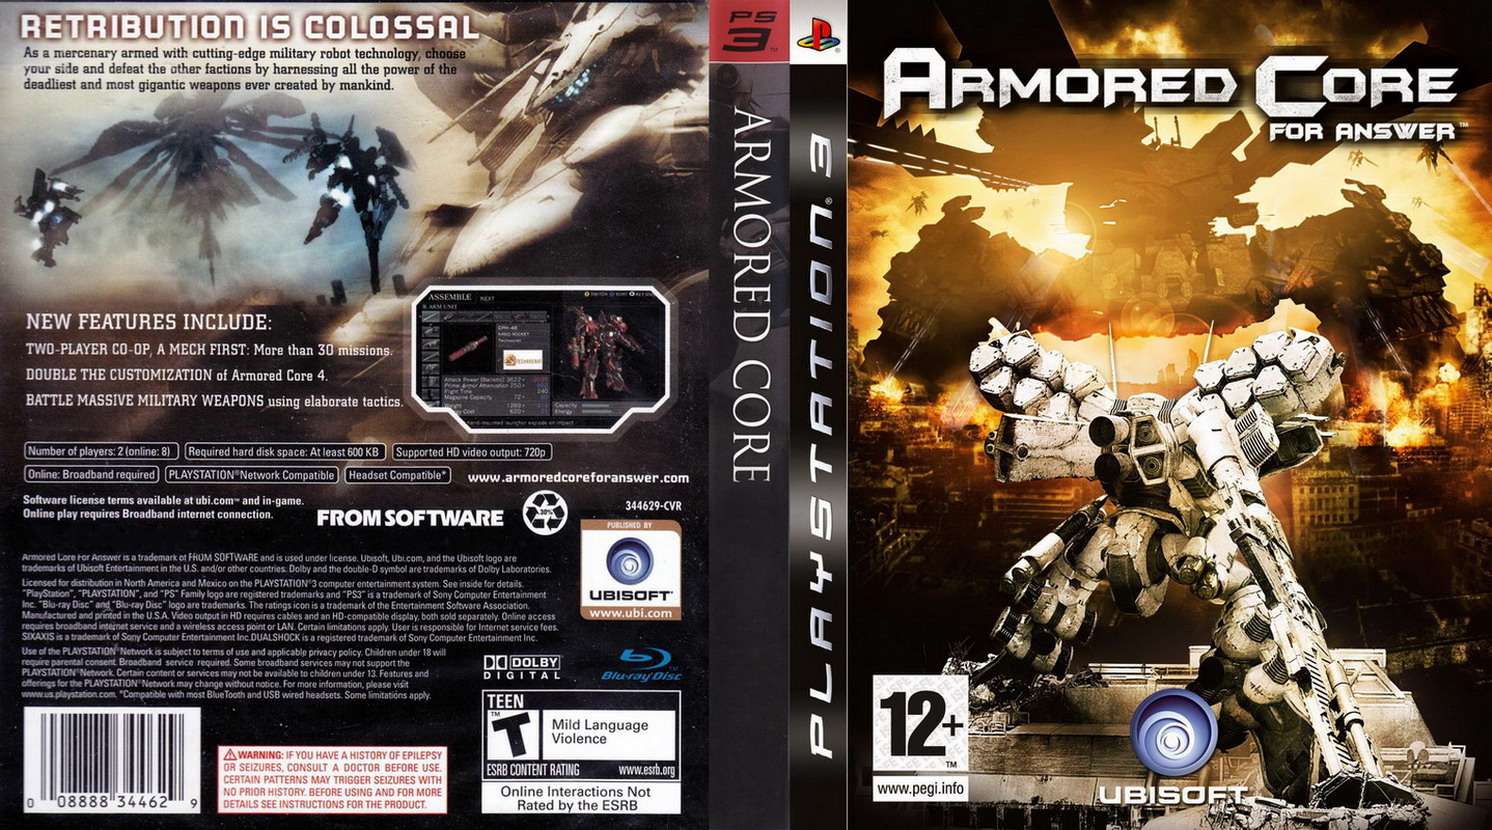 PS3版《裝甲核心:答案》封面